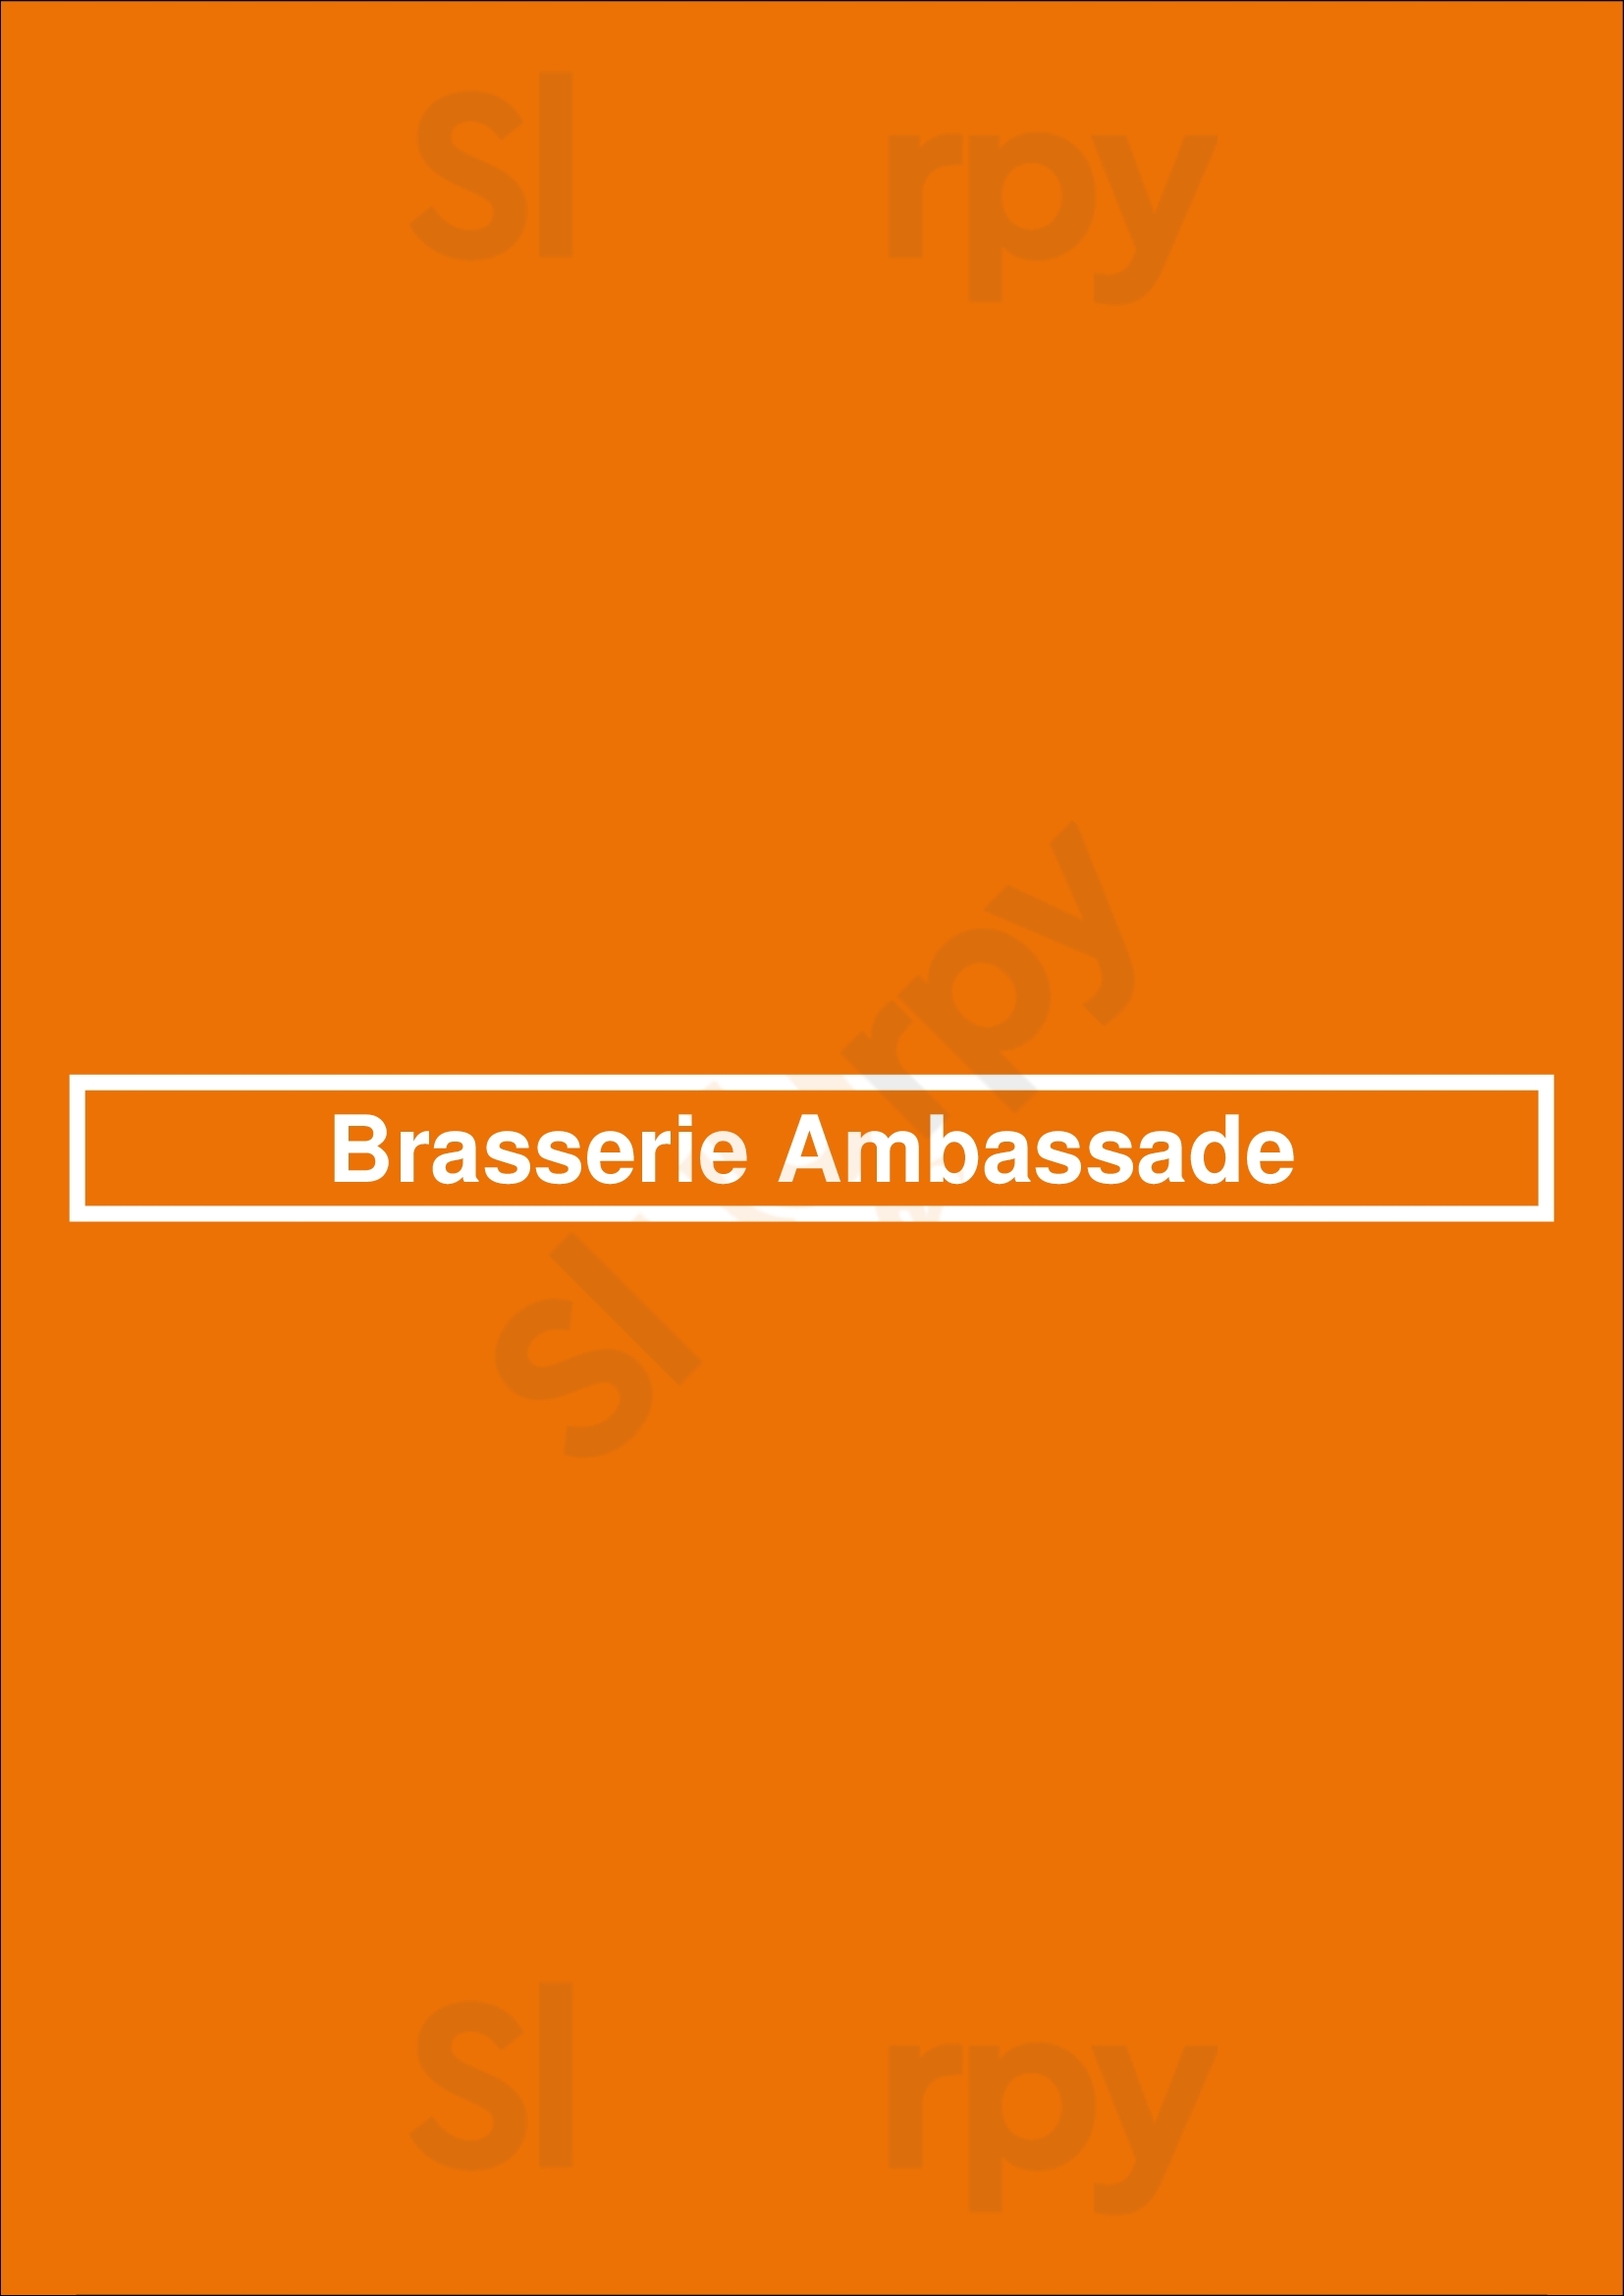 Brasserie Ambassade Amsterdam Menu - 1